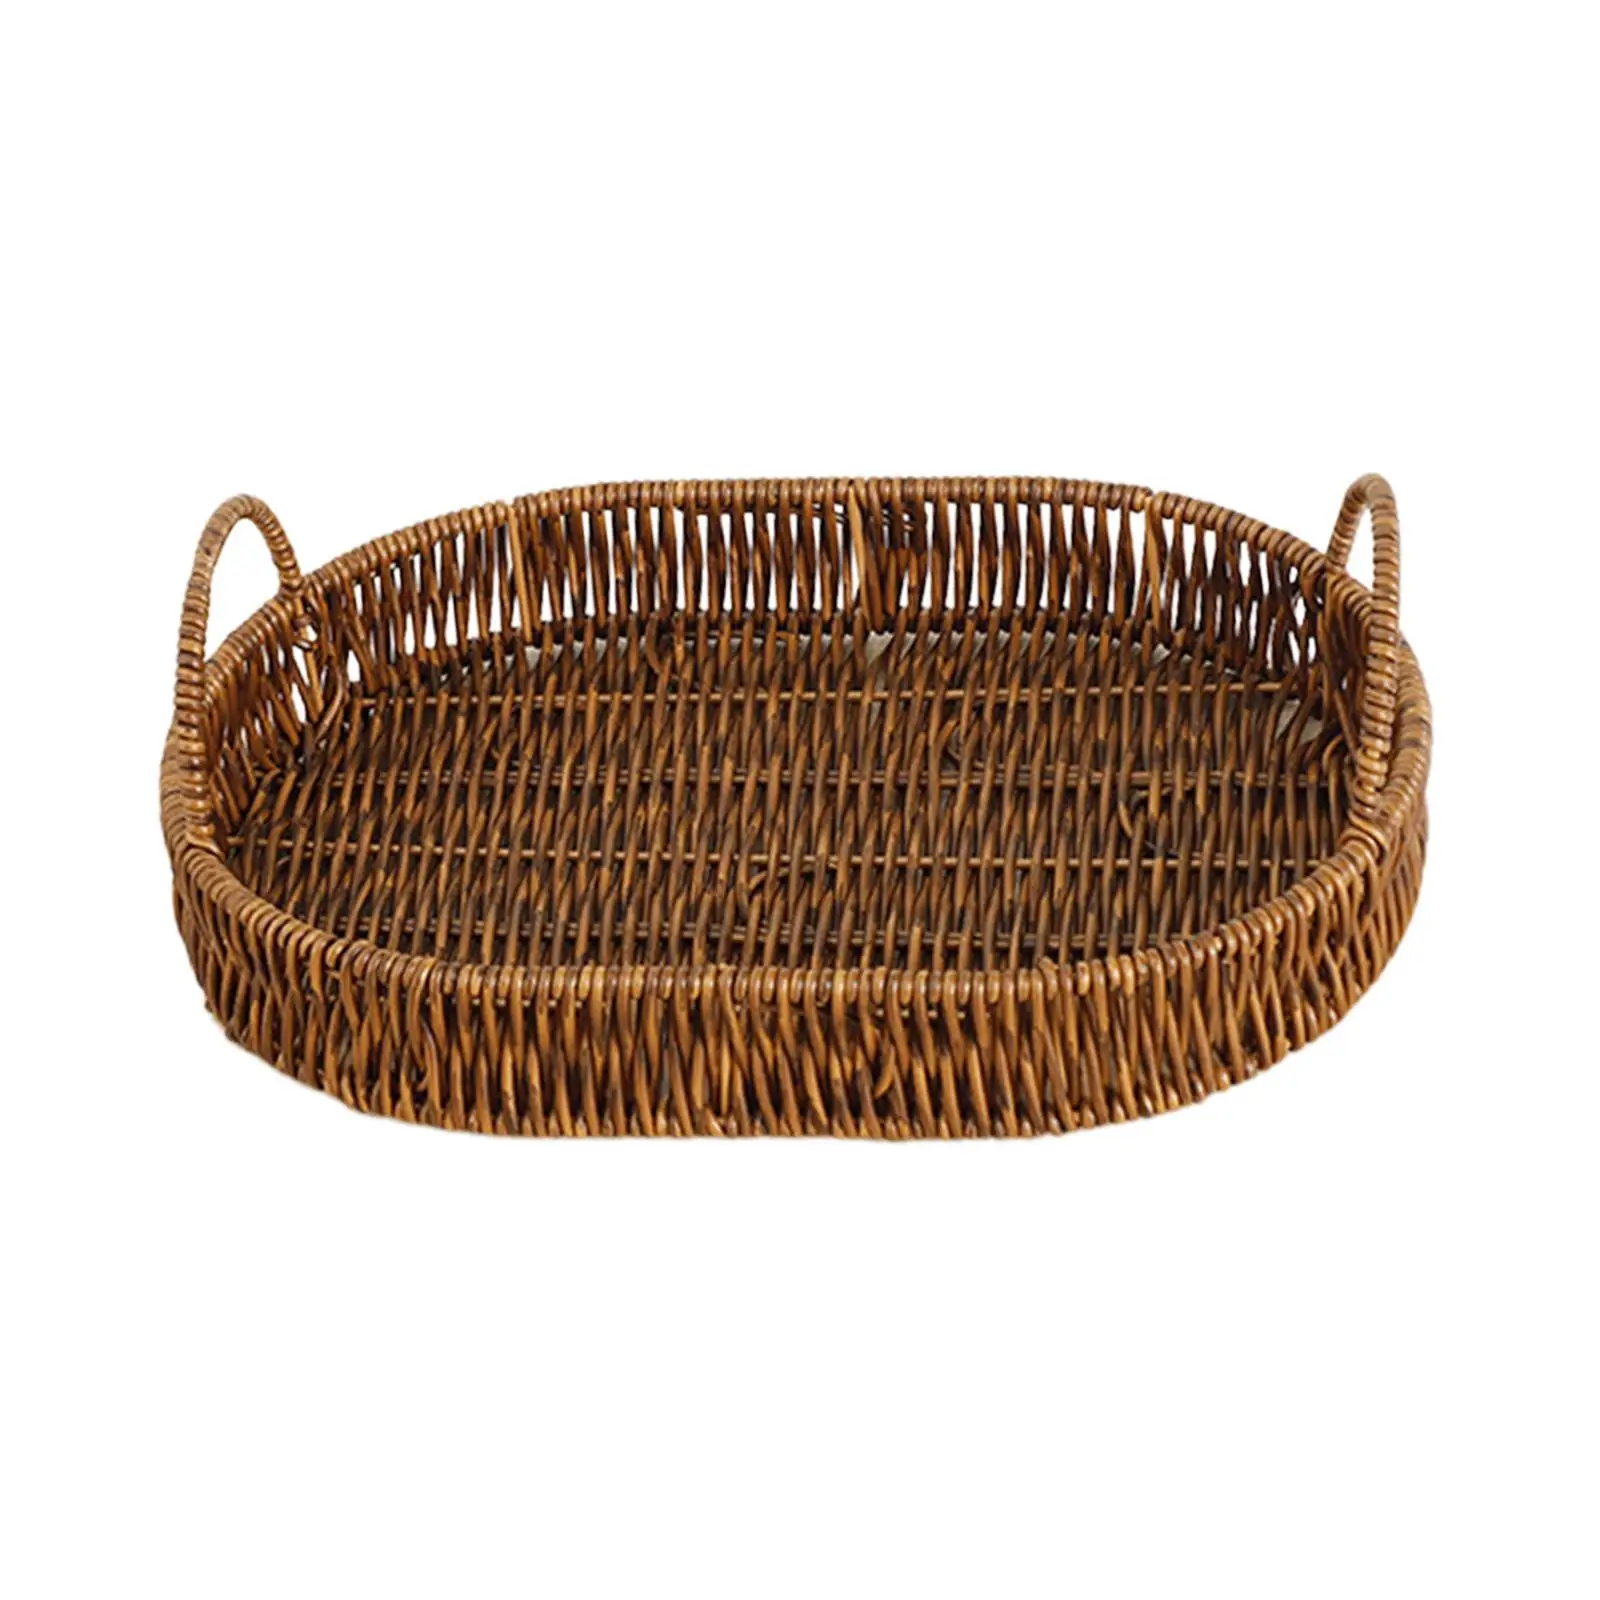 Hand Woven Rattan Fruit Baskets Rattan Baskets Wicker Woven Basket for